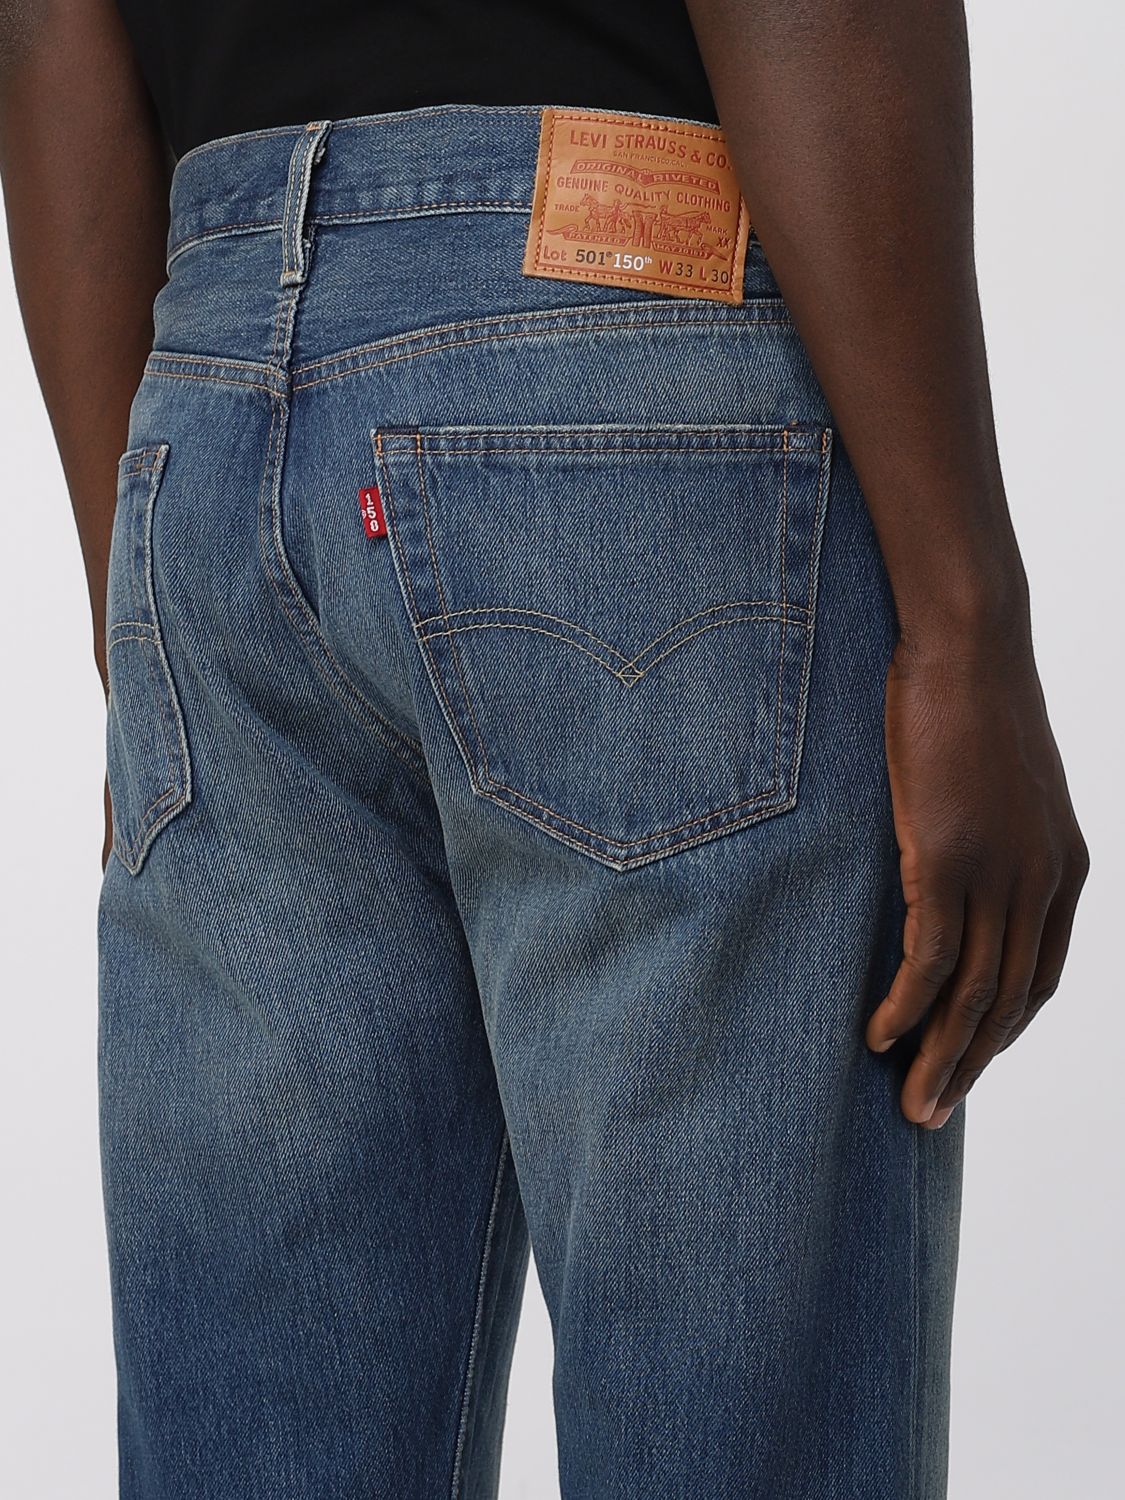 LEVI'S: jeans for man - Indigo | Levi's jeans 005013383 online on ...